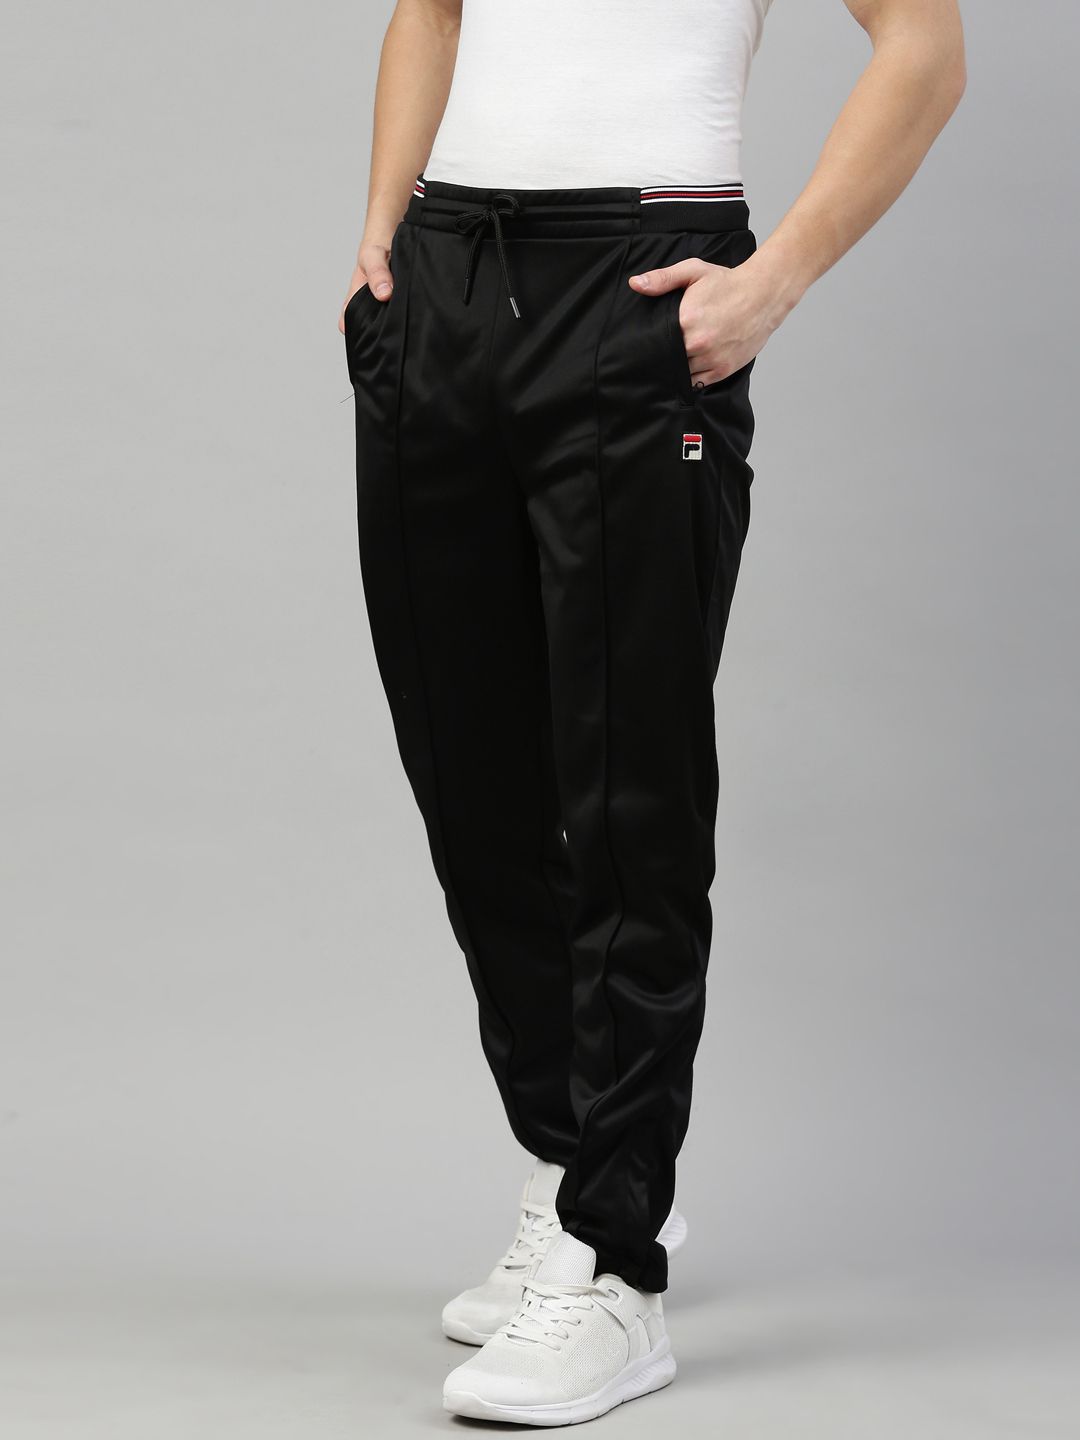 Spring Autumn Harem Baggy Sweatpants Men Sportswear Black Jogger Pants Male  Zip Pockets Track Trousers Plus Size 6XL 7XL 8XL